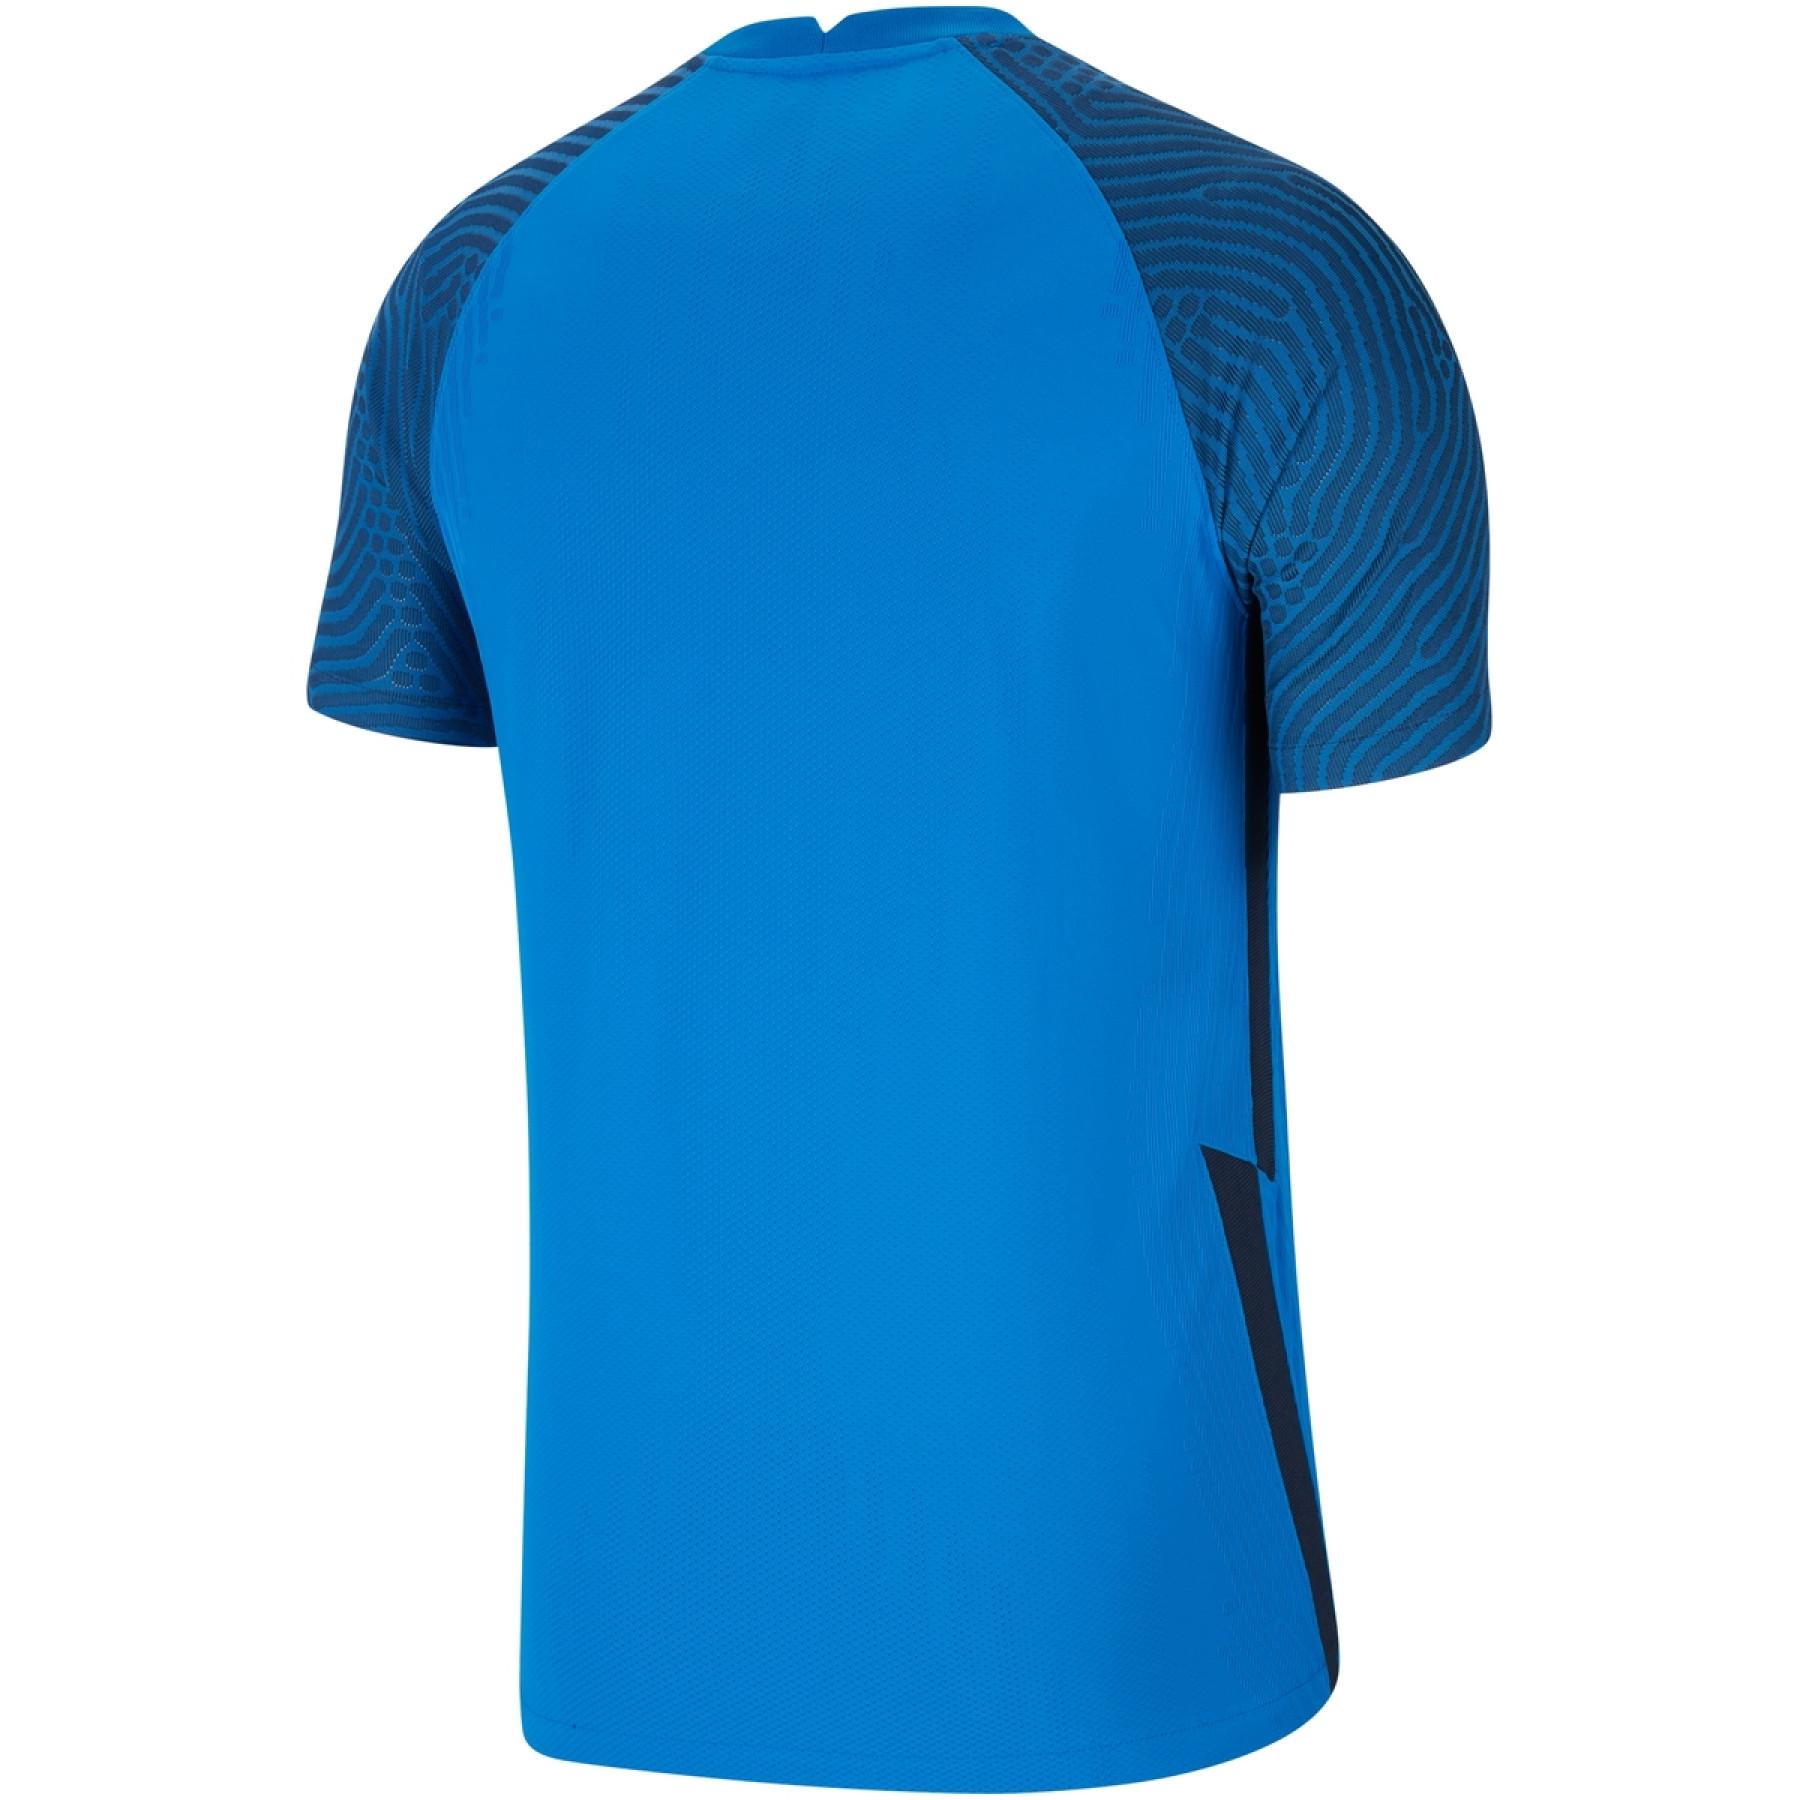 Camiseta Nike Vapor Knit III